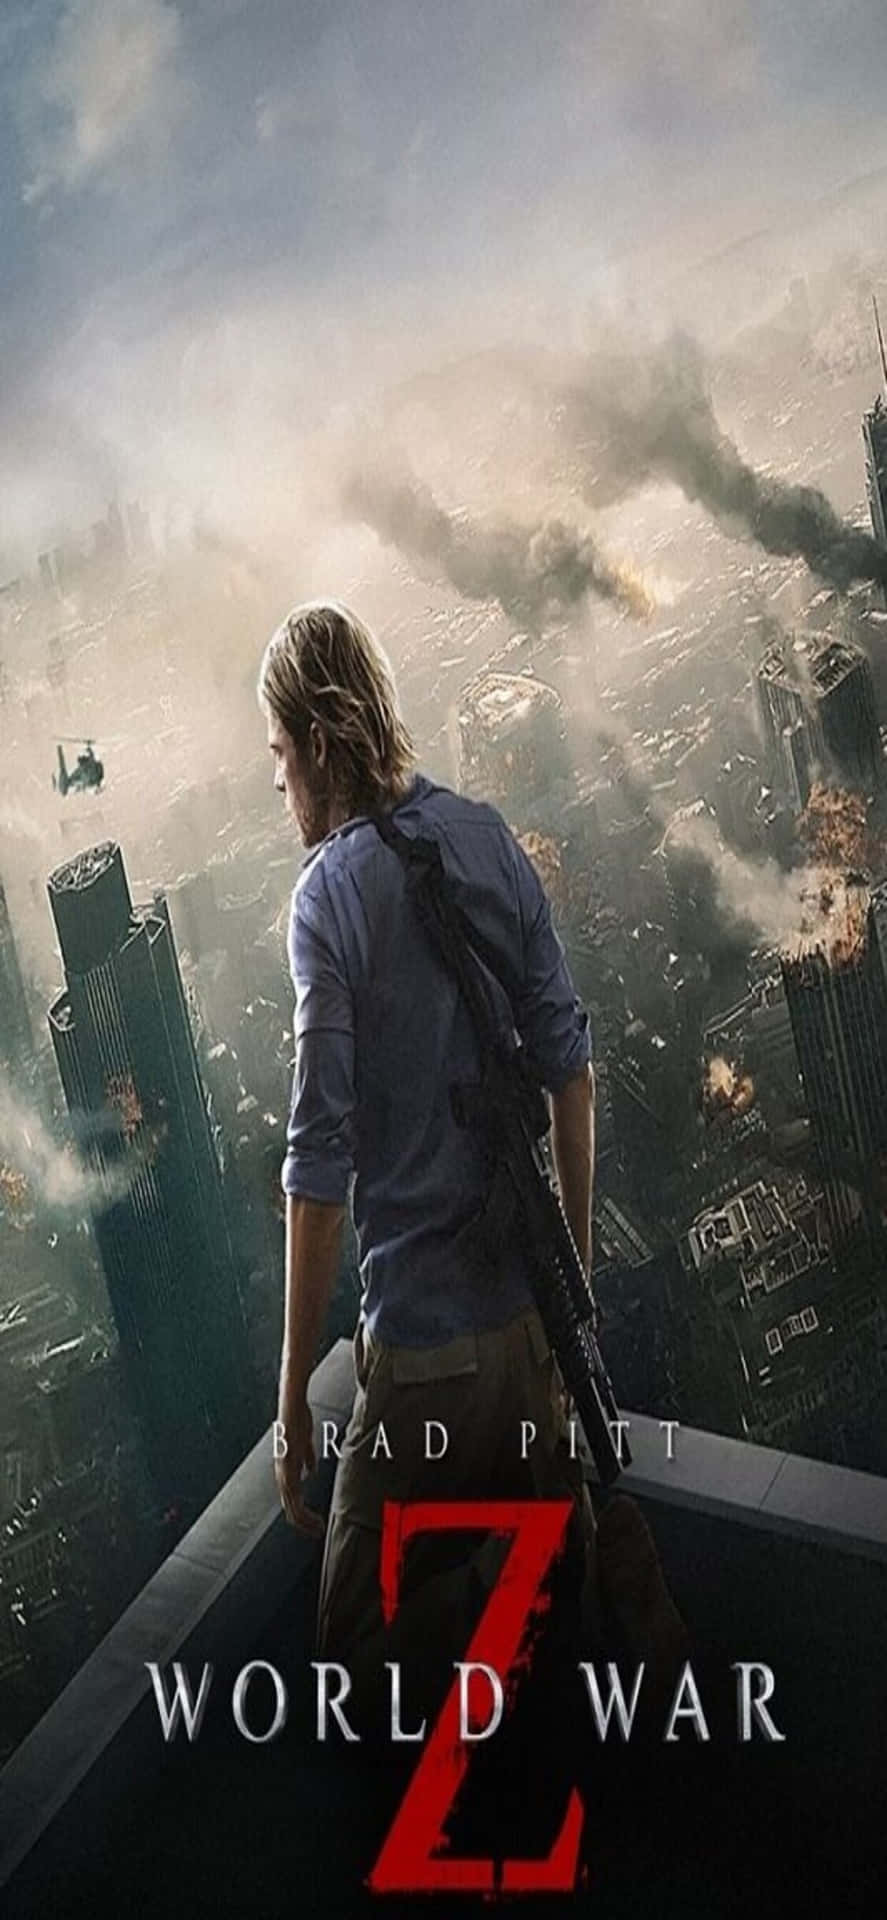 Brad Pitt Poster iPhone XS Max World War Z Background